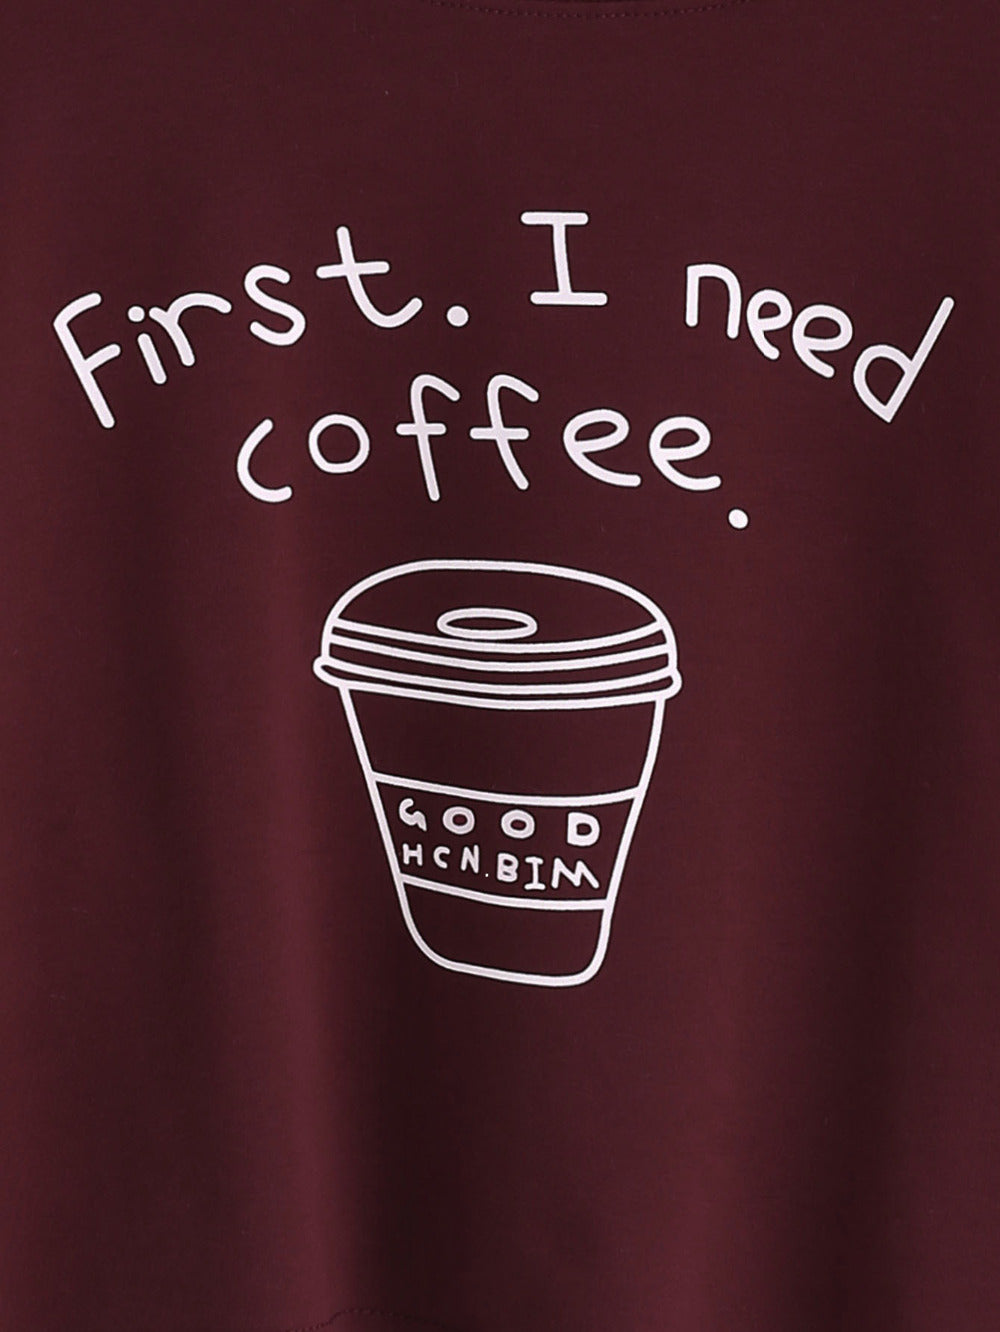 First I Need Coffee Sweatshirt - whimsyandever